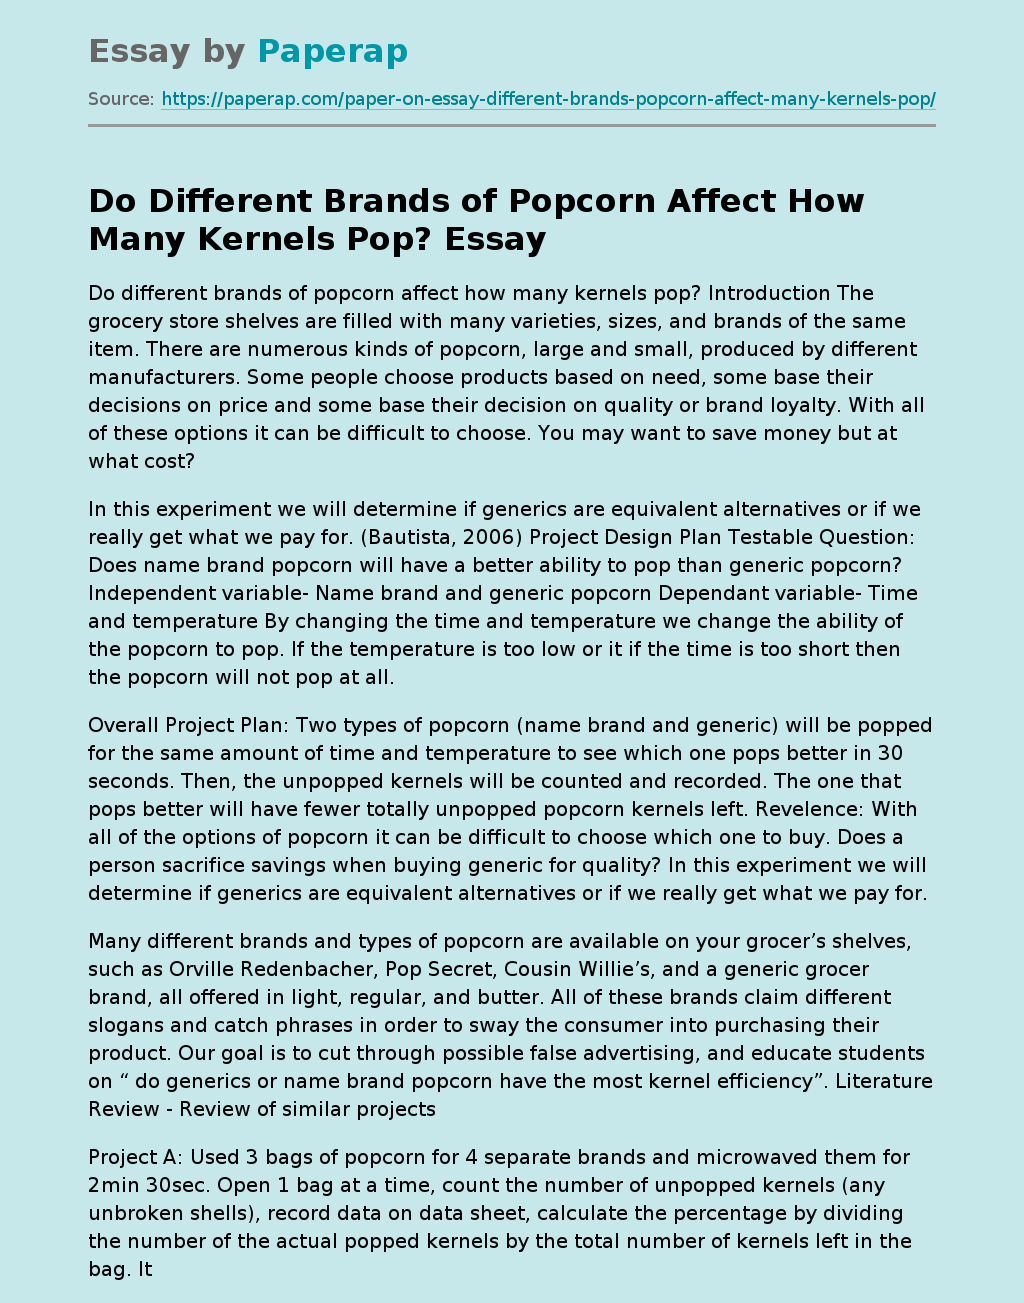 Do Different Brands of Popcorn Affect How Many Kernels Pop?